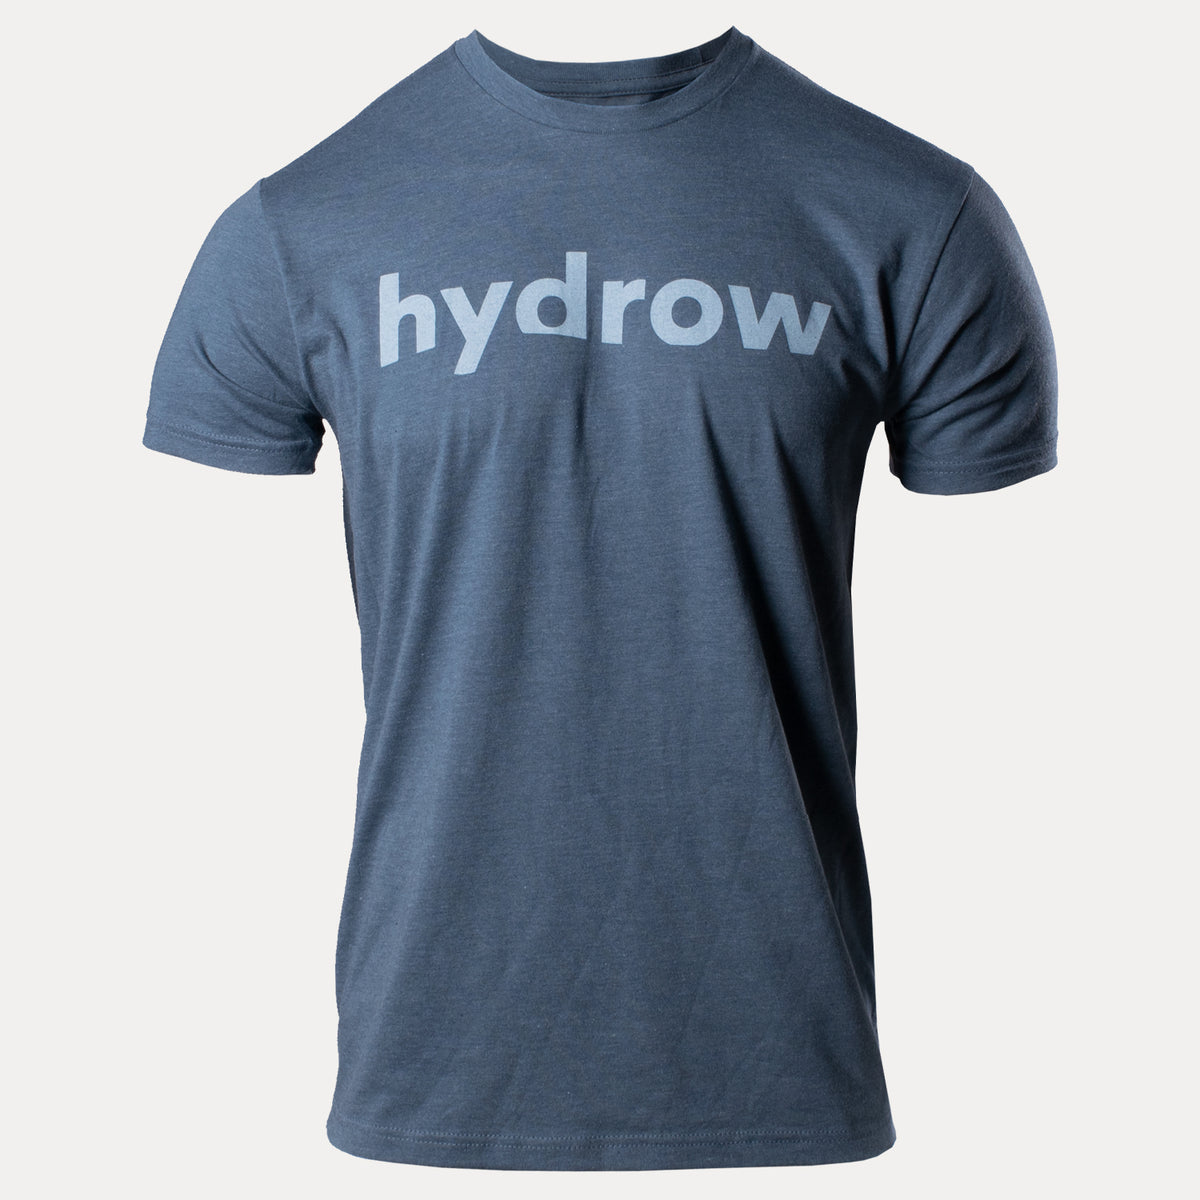 Hydrow Crew Neck T-Shirt